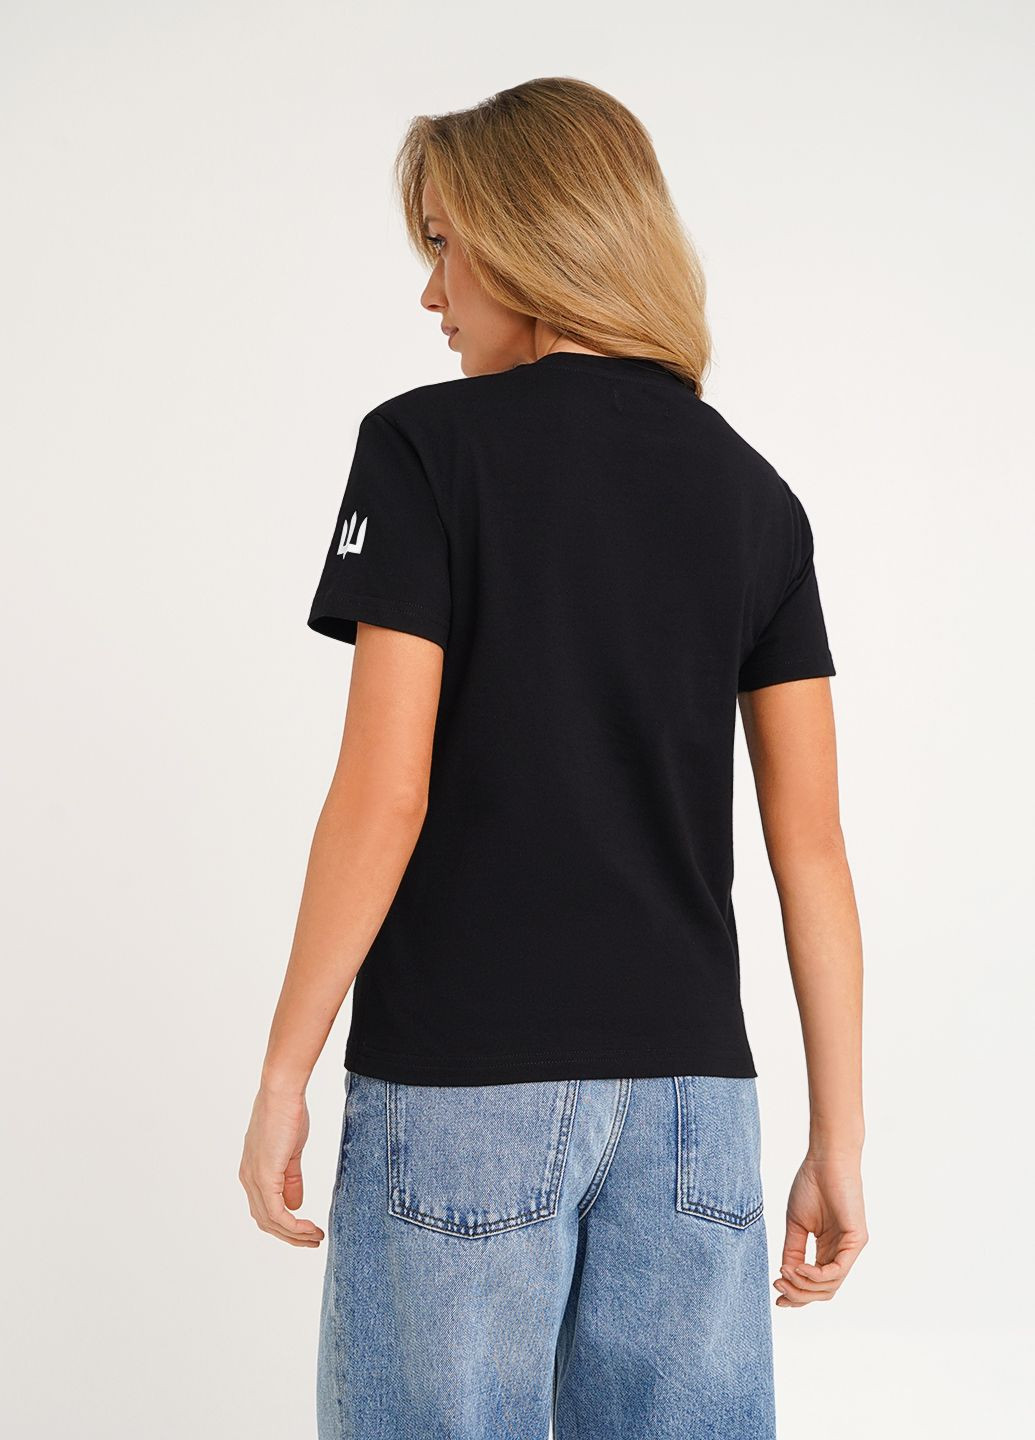 Чорна футболка жіноча Kasta x ЄП